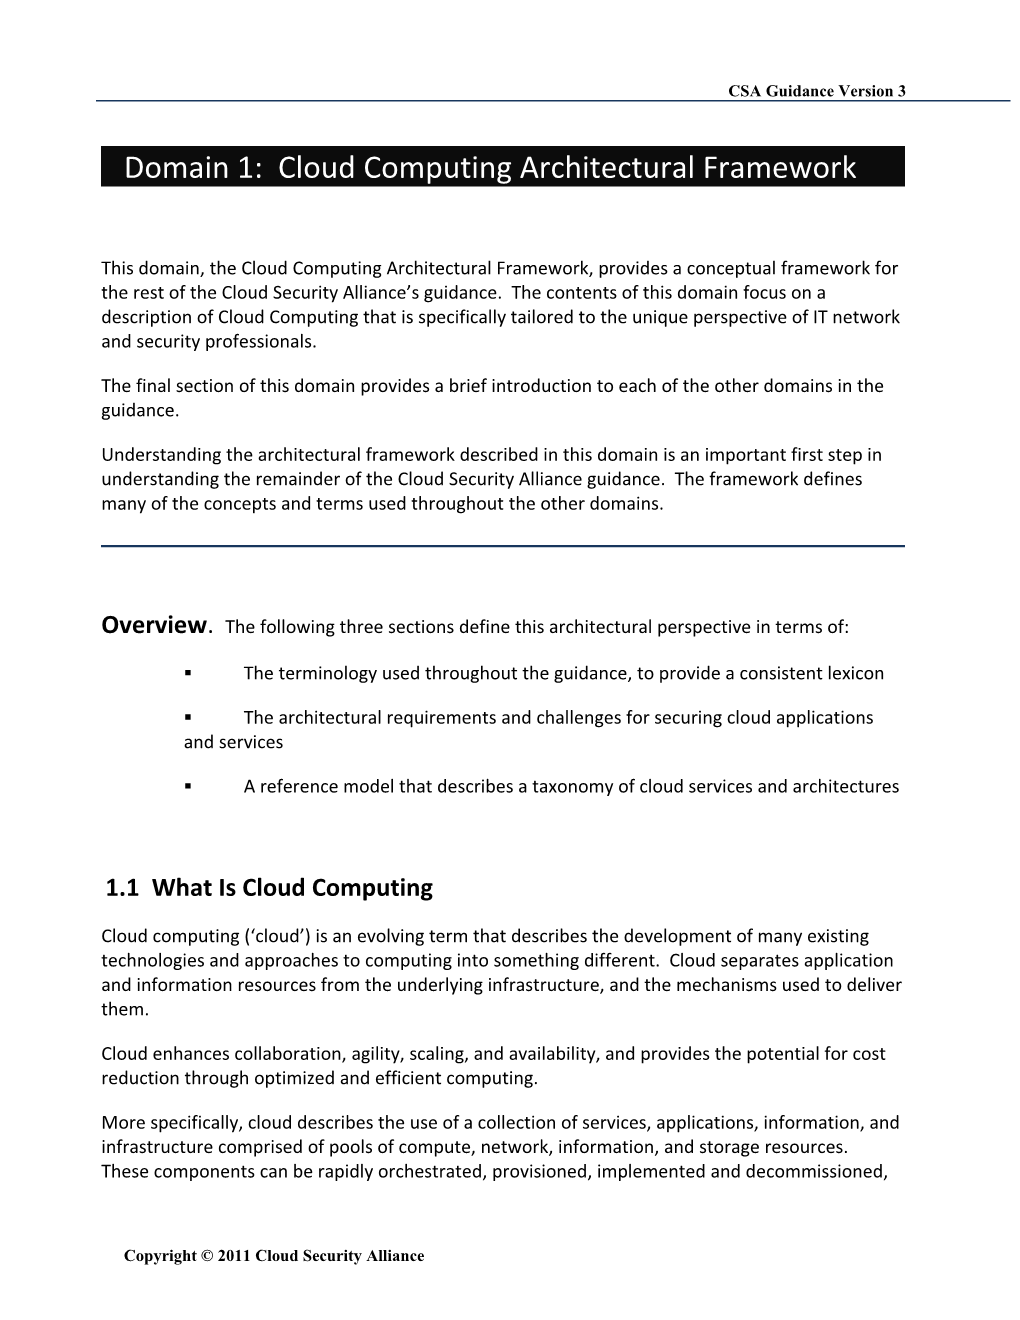 Domain 1: Cloud Computing Architectural Framework